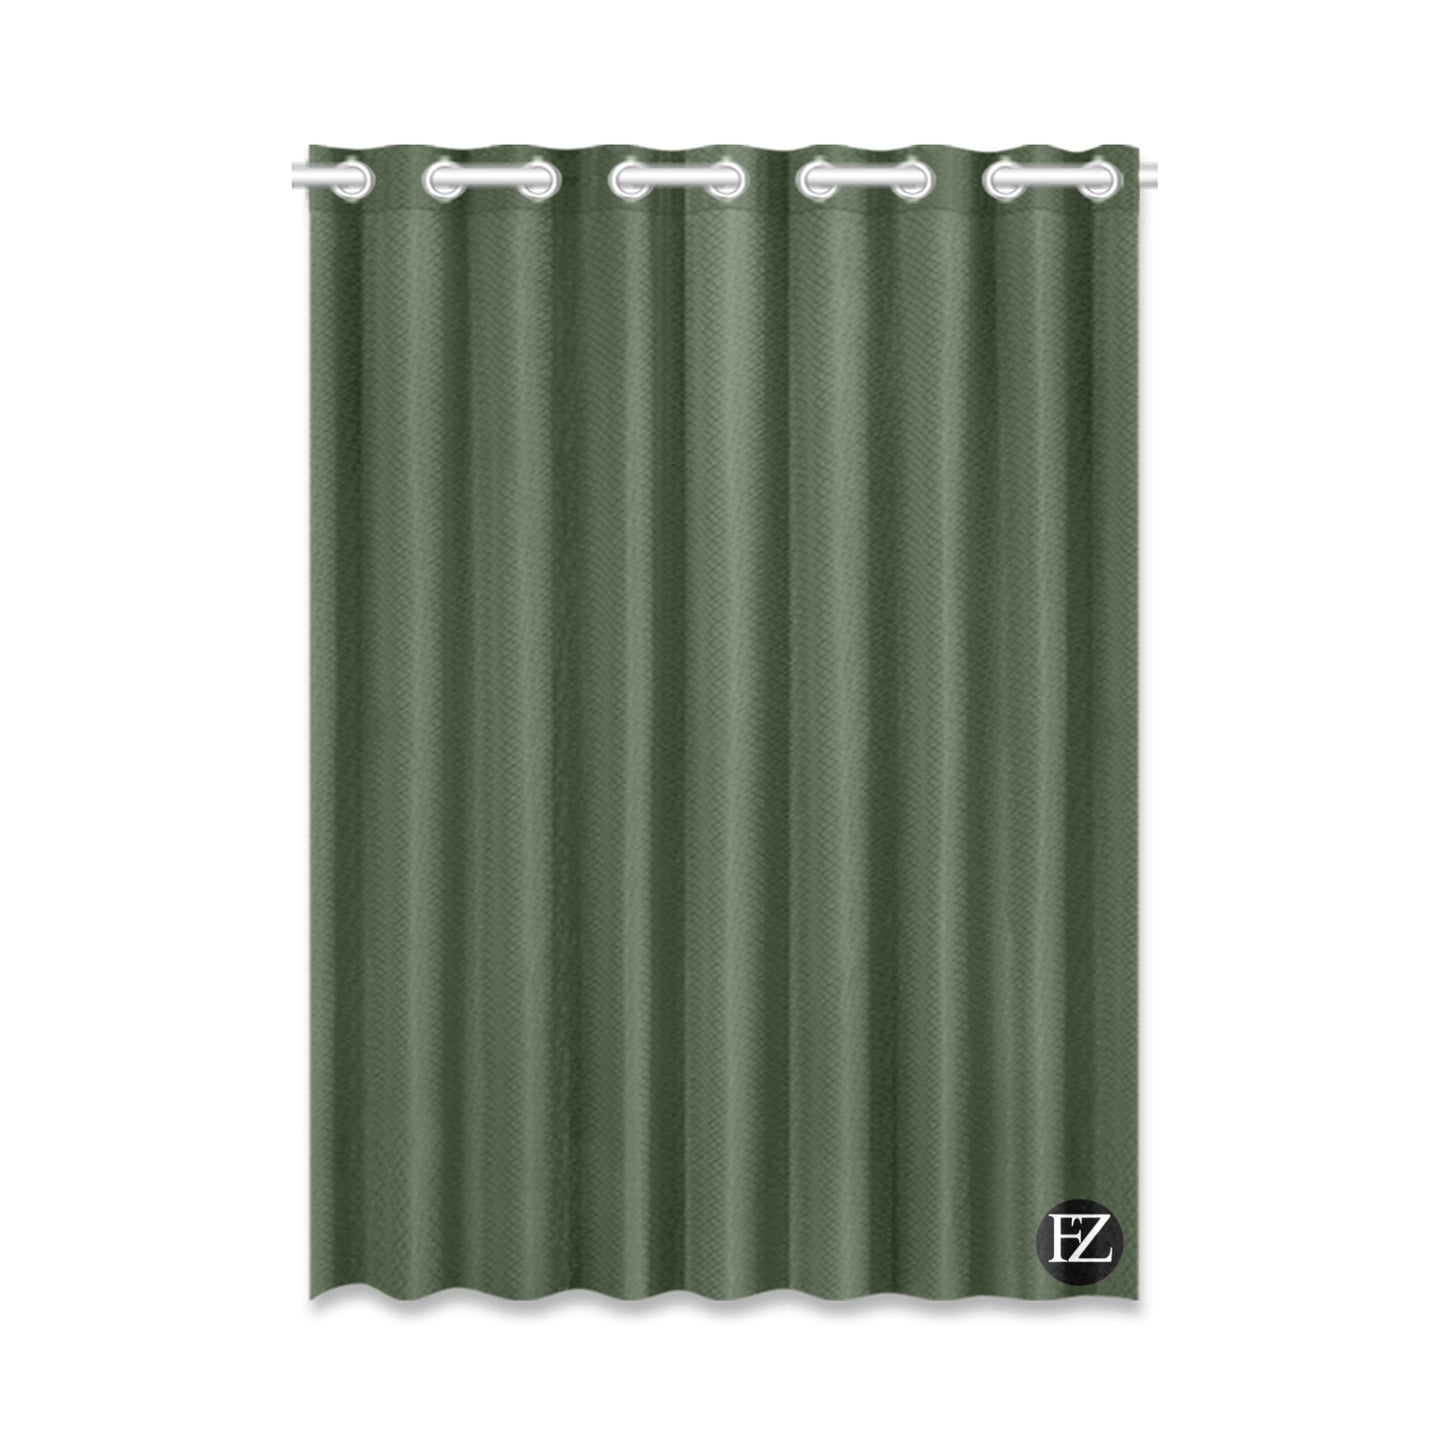 fz window curtain one size / fz room curtains - dark green window curtain 52" x 72" (one piece)